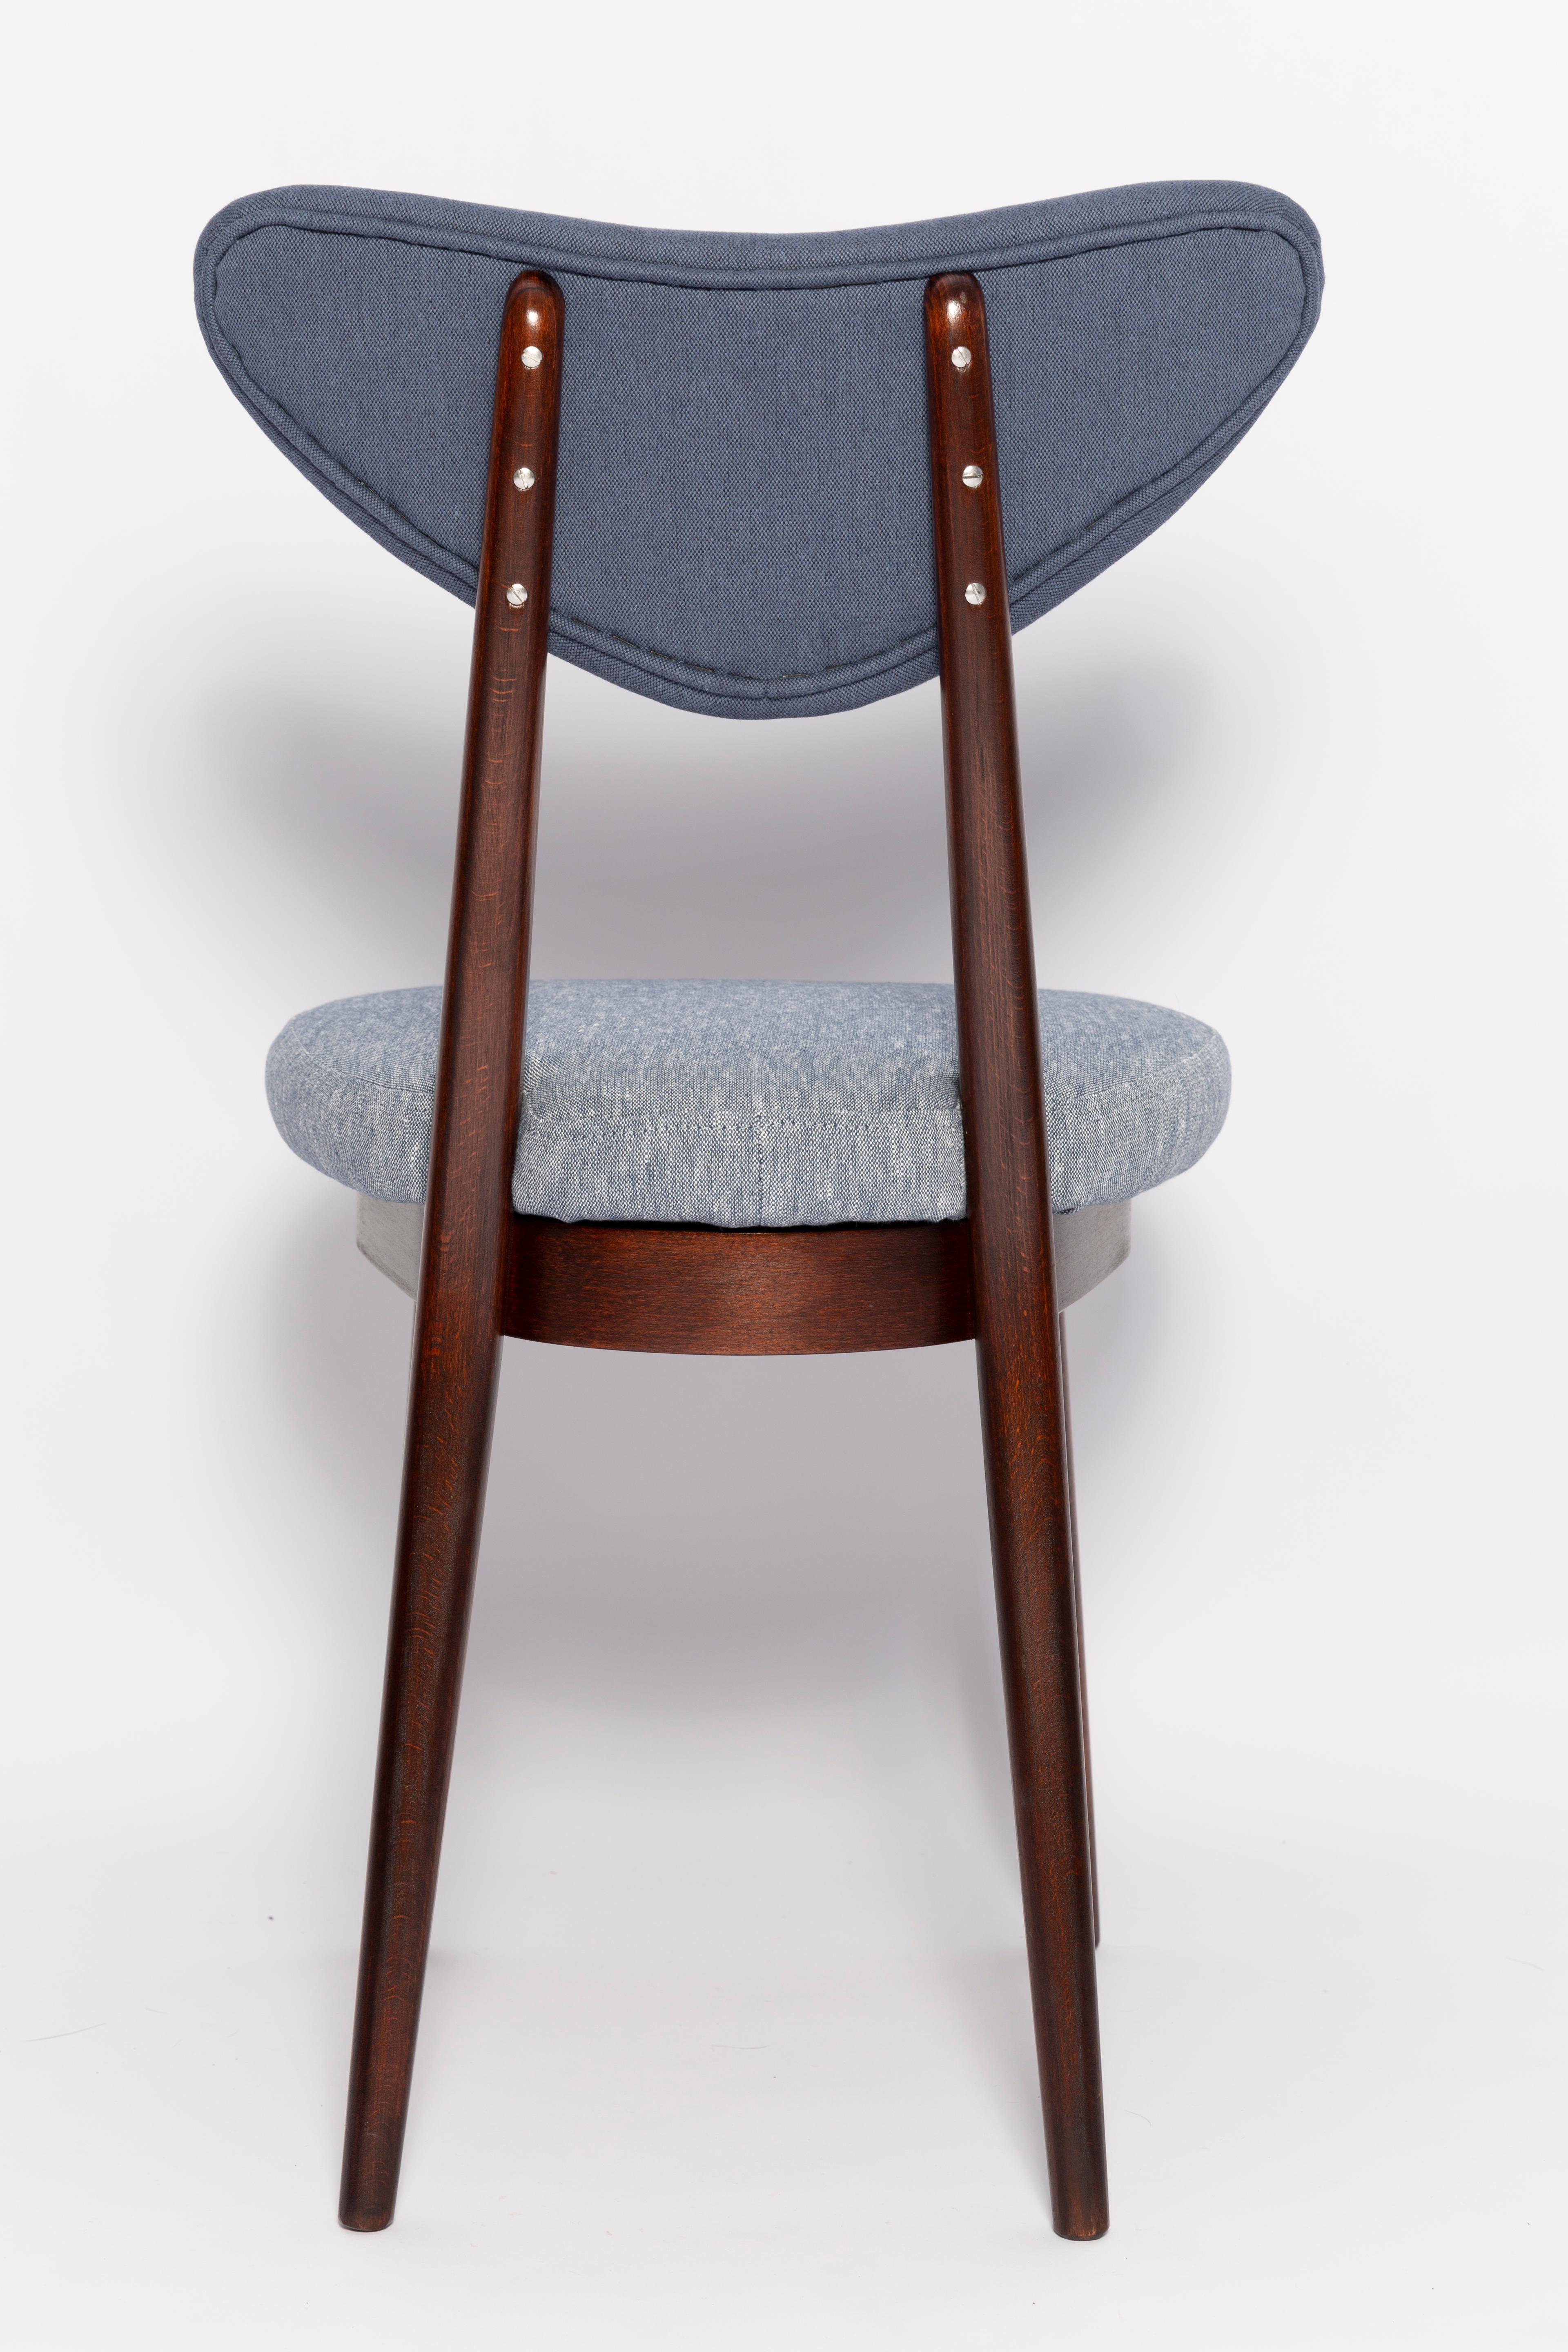 Midcentury Light and Medium Blue Denim Heart Chair, Europe, 1960s For Sale 2